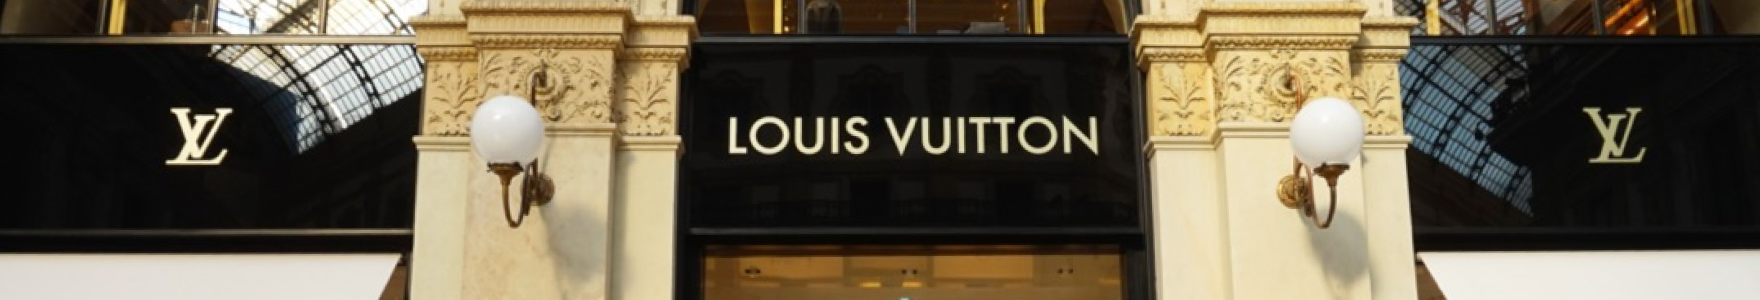 Louis Vuitton 背景